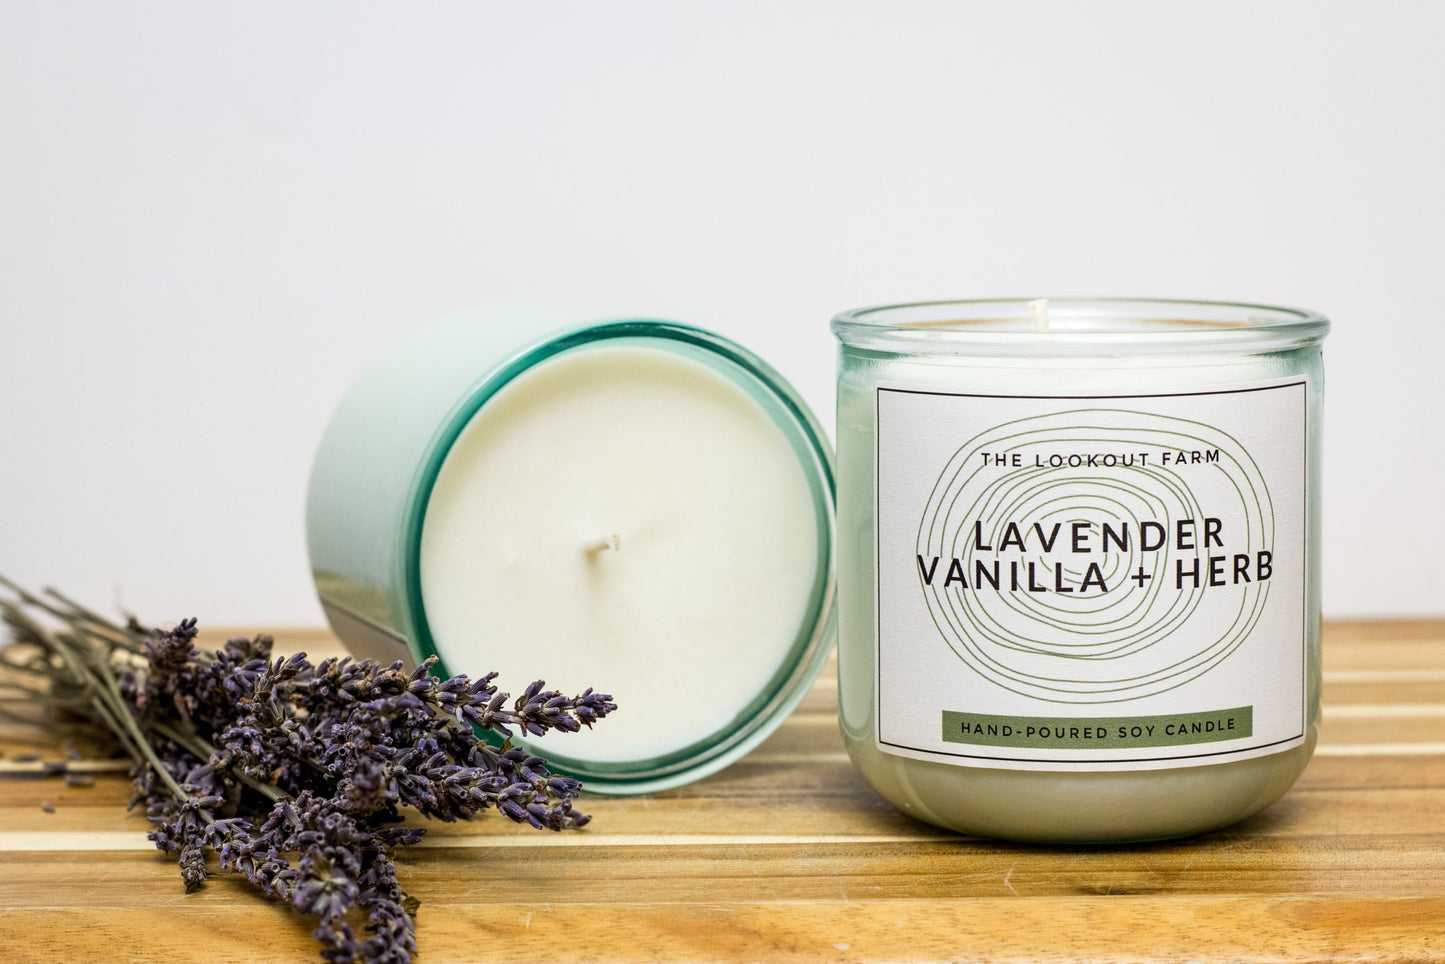 Lavender Vanilla + Herb Candle